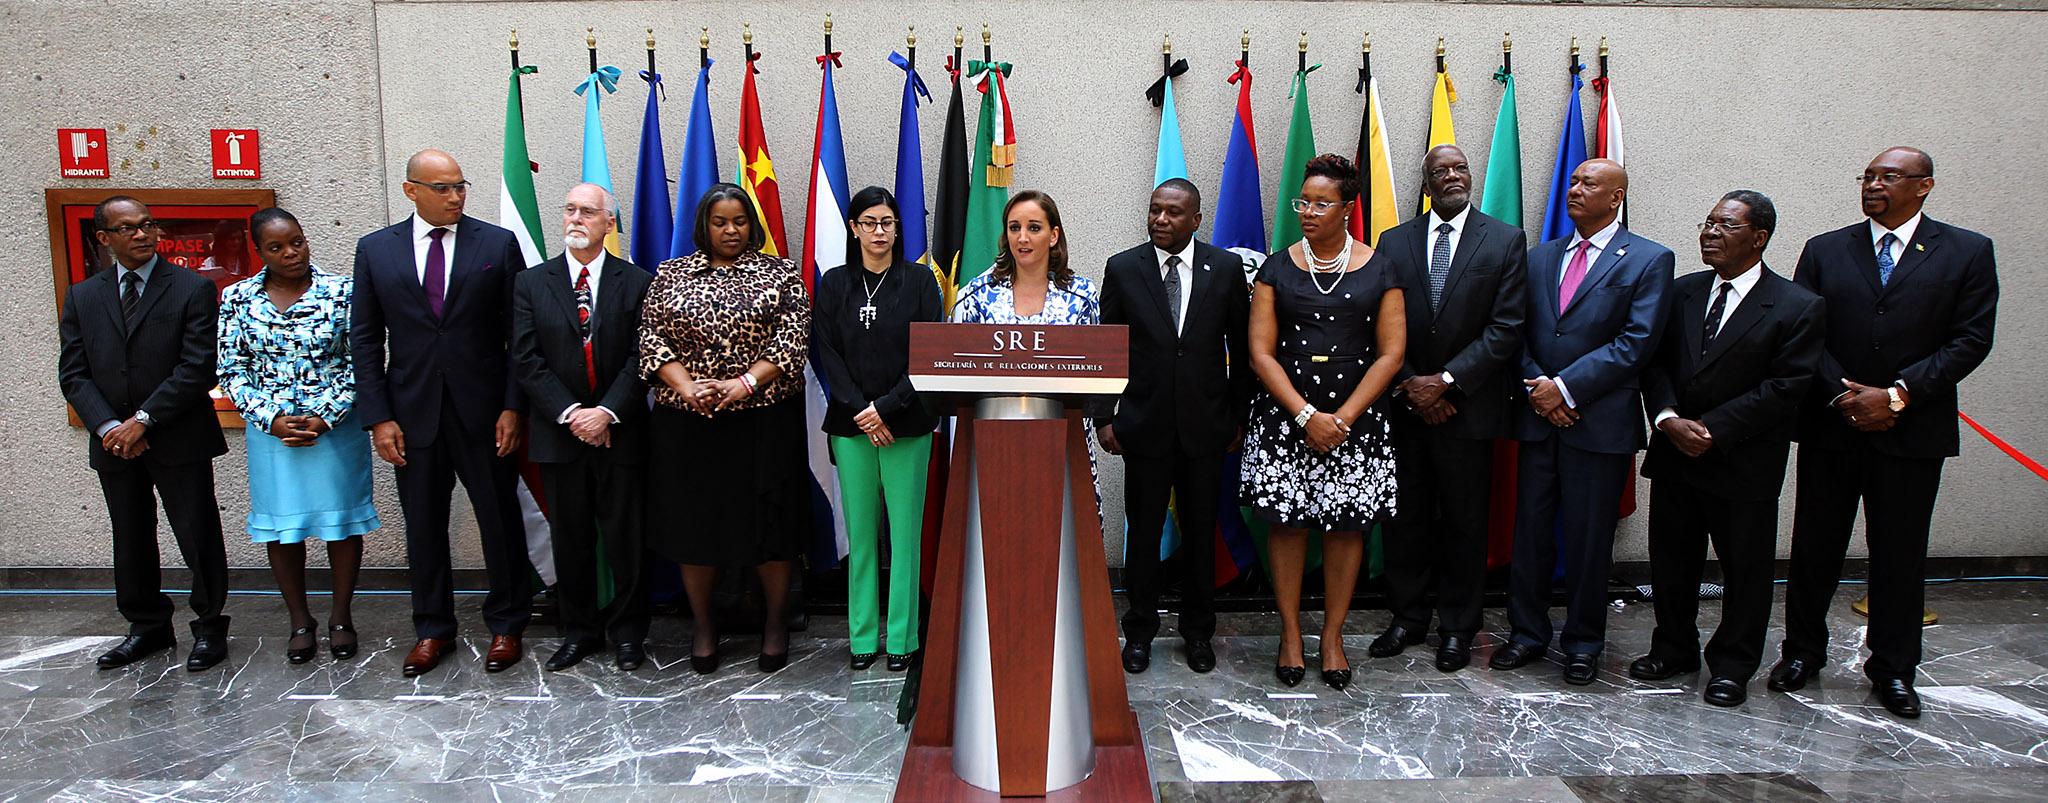 FOTO 1 La canciller Claudia Ruiz Massieu inaugur  oficina para embajadas concurrentes del Caribe.jpg